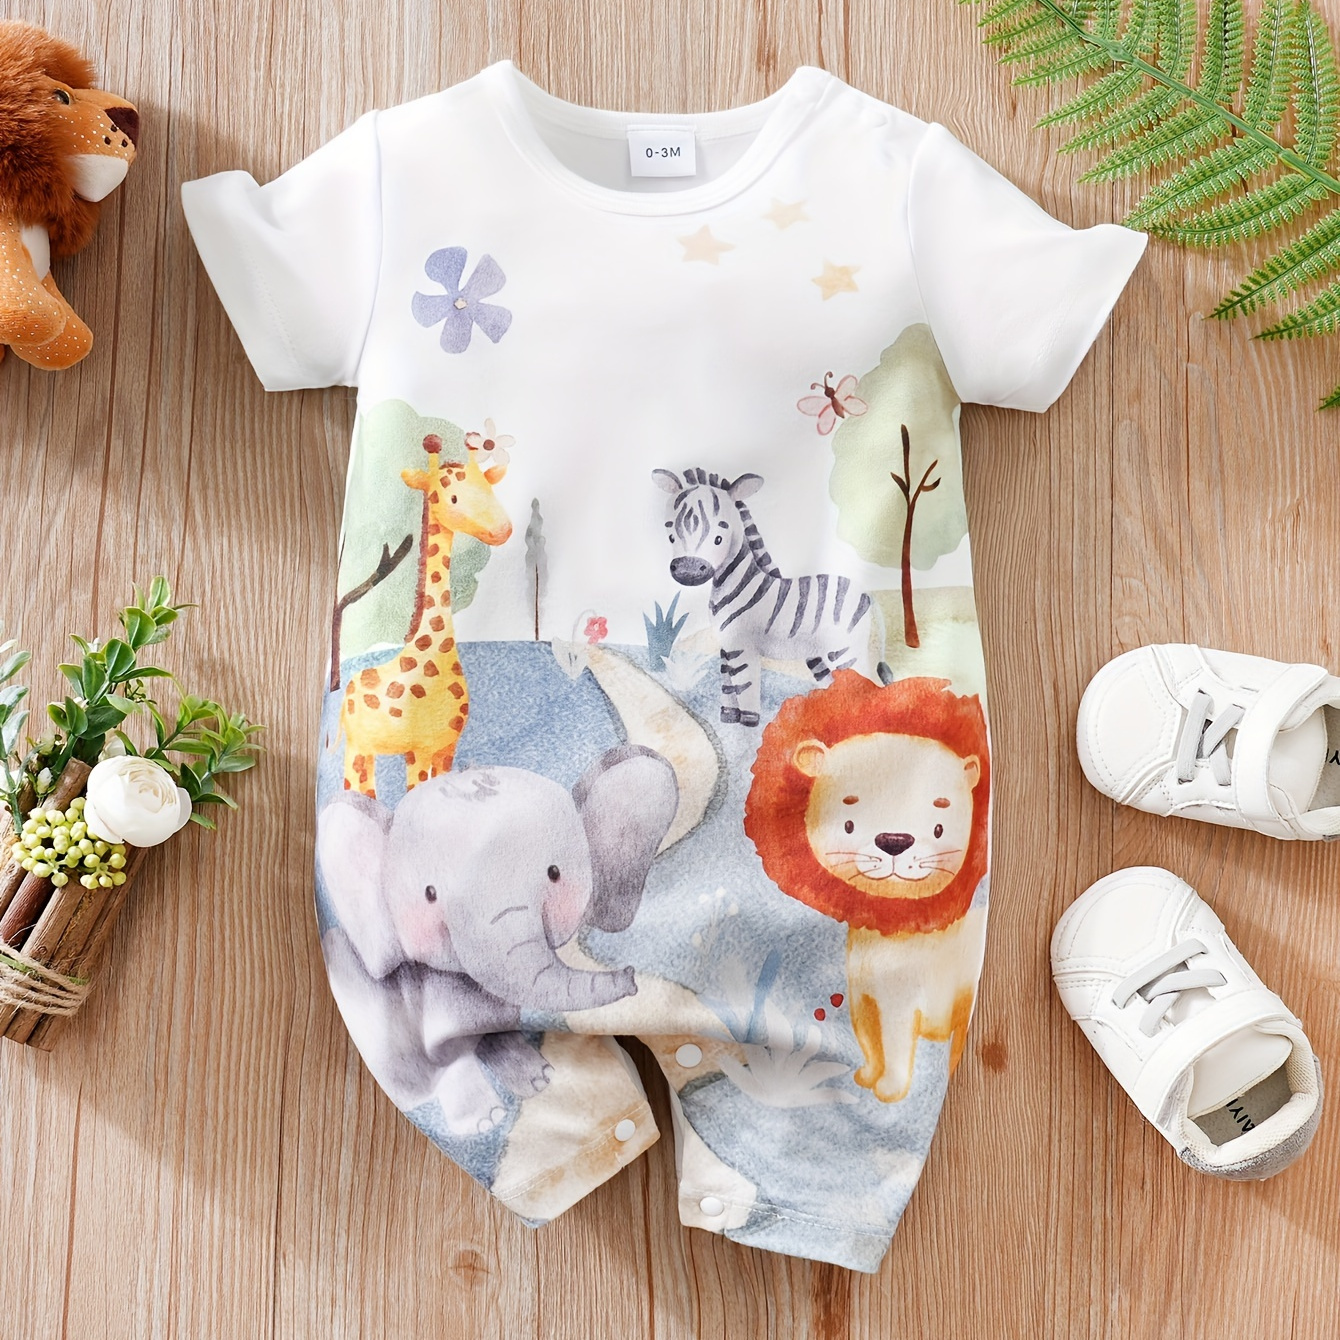 

Baby Boys Summer Romper, Cute Cartoon Animal Print, Casual Short Sleeve Onesie, Breathable Fabric, Snap Closure, Baby Clothing